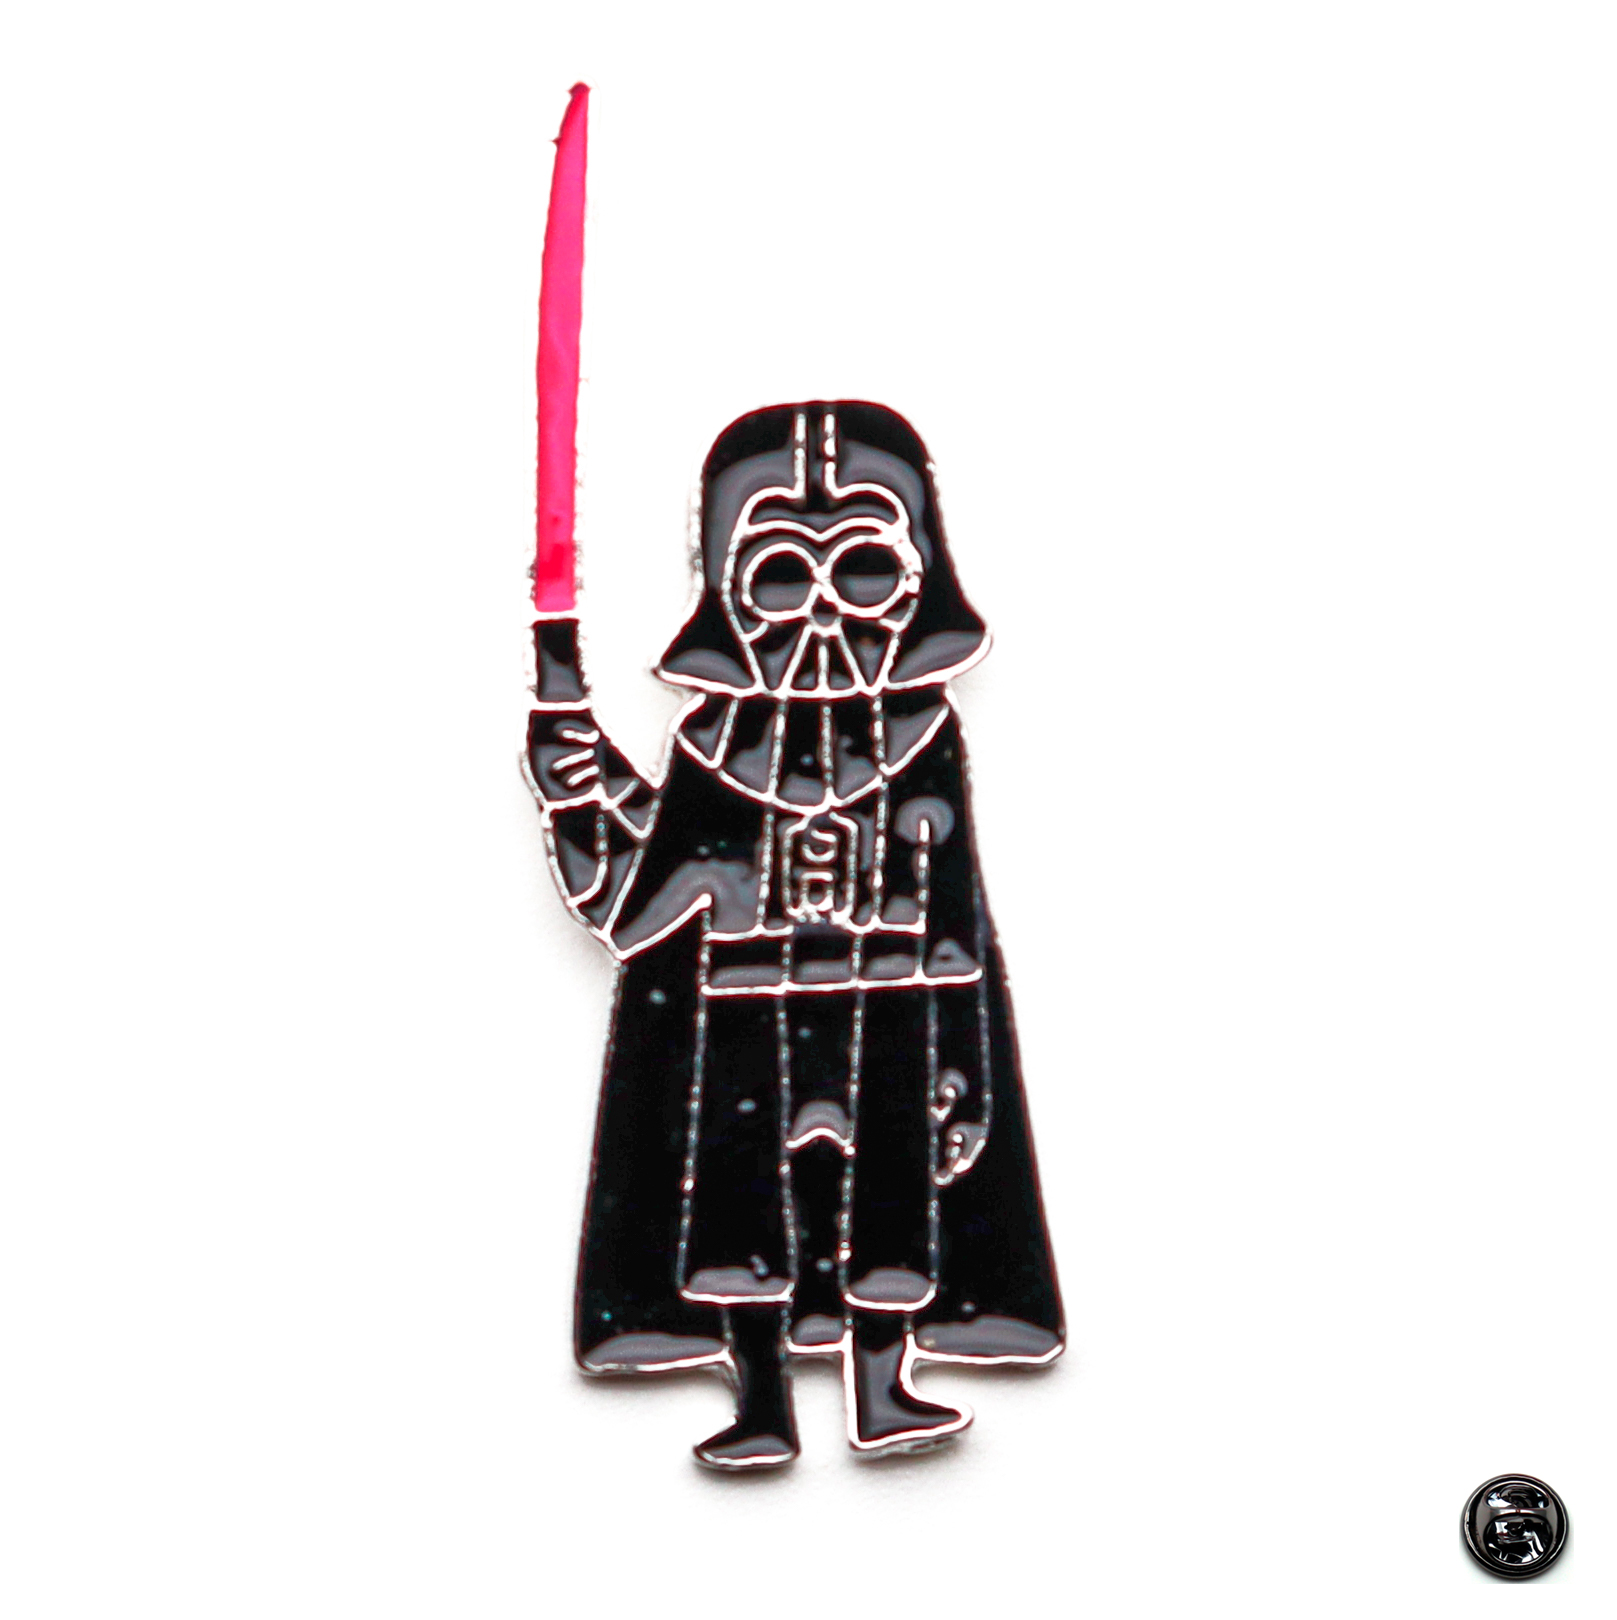 Prendedor (pin) Star Wars + Bolsa Decorativa